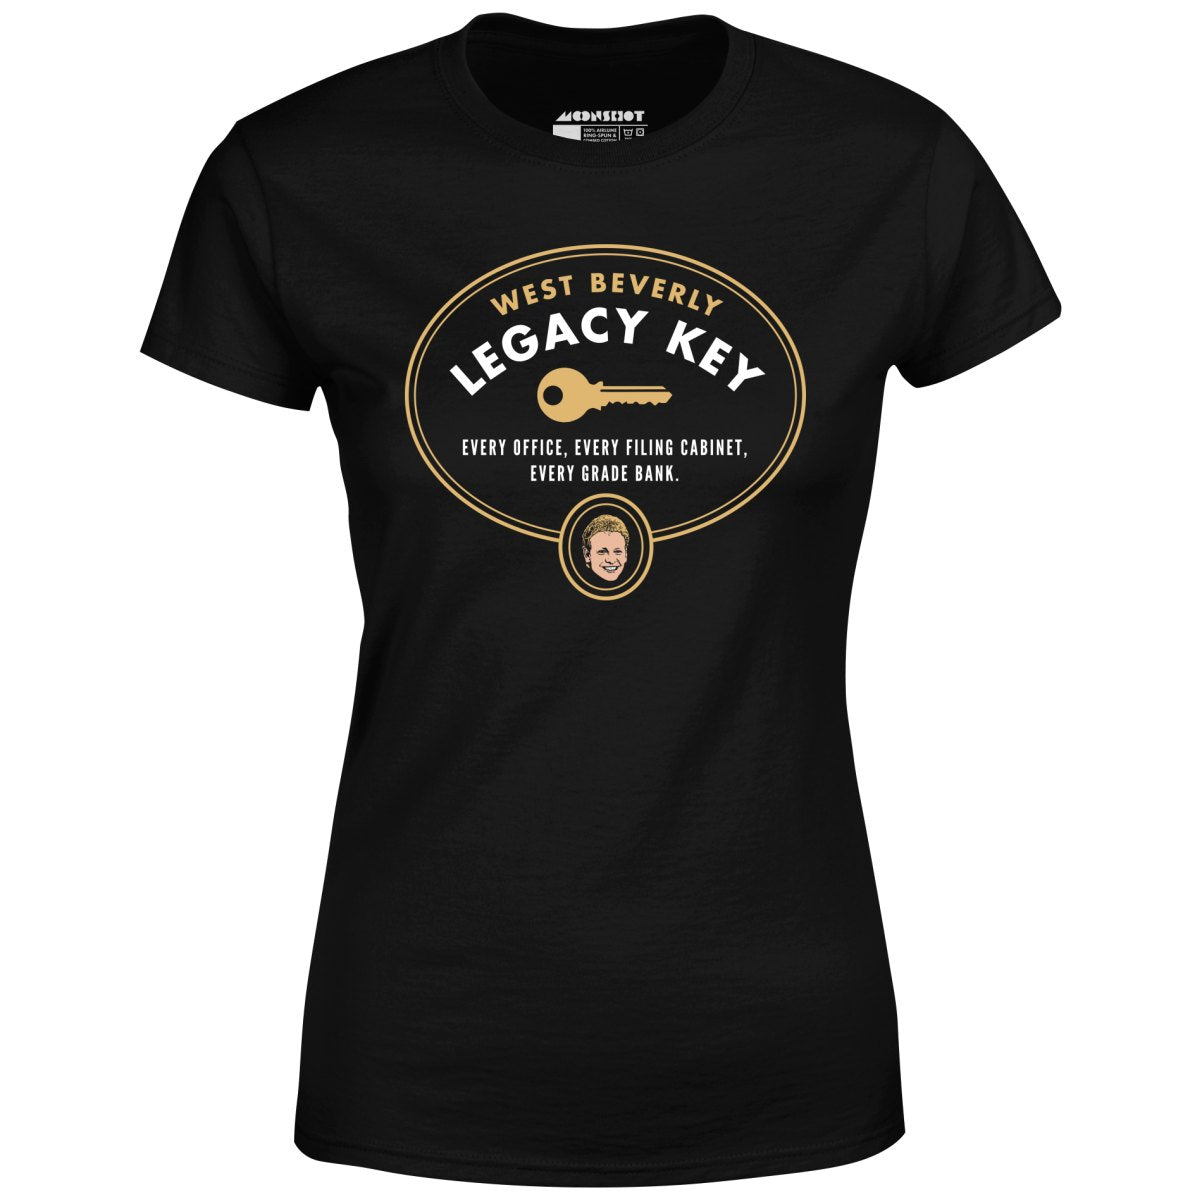 West Beverly Legacy Key - 90210 - Women's T-Shirt